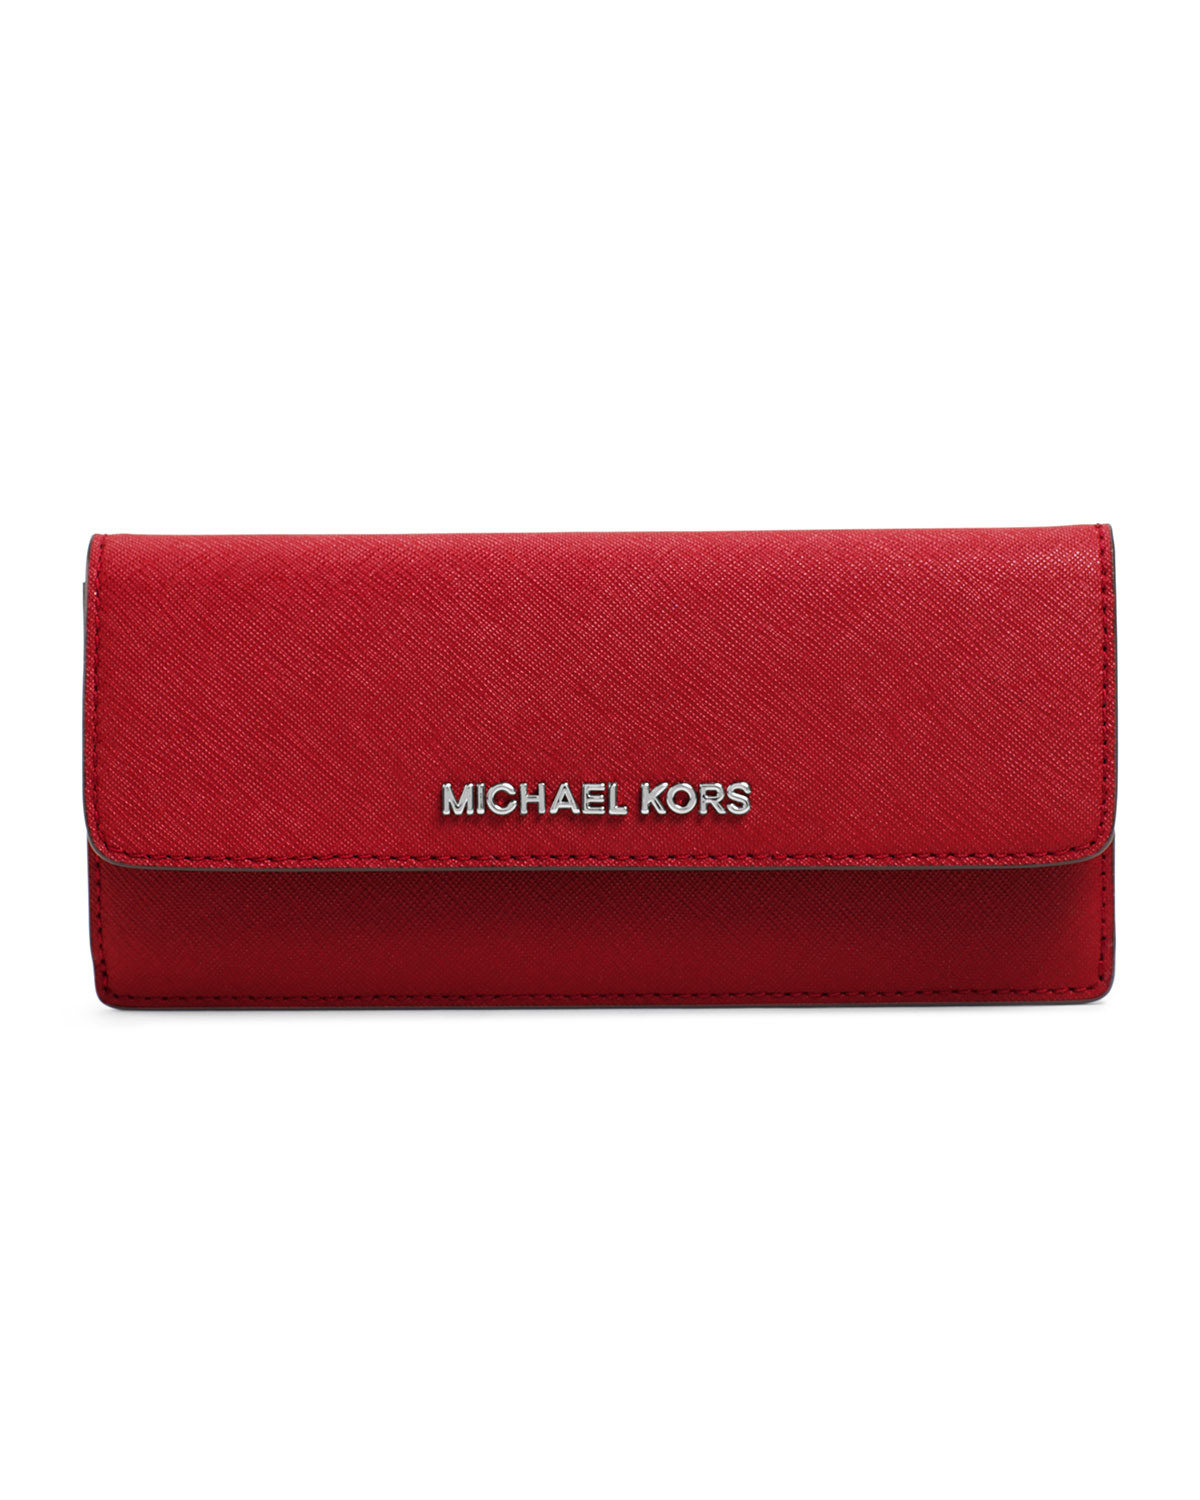 Michael Kors Michael Large Jet Set Travel Slim Wallet in Red | Lyst